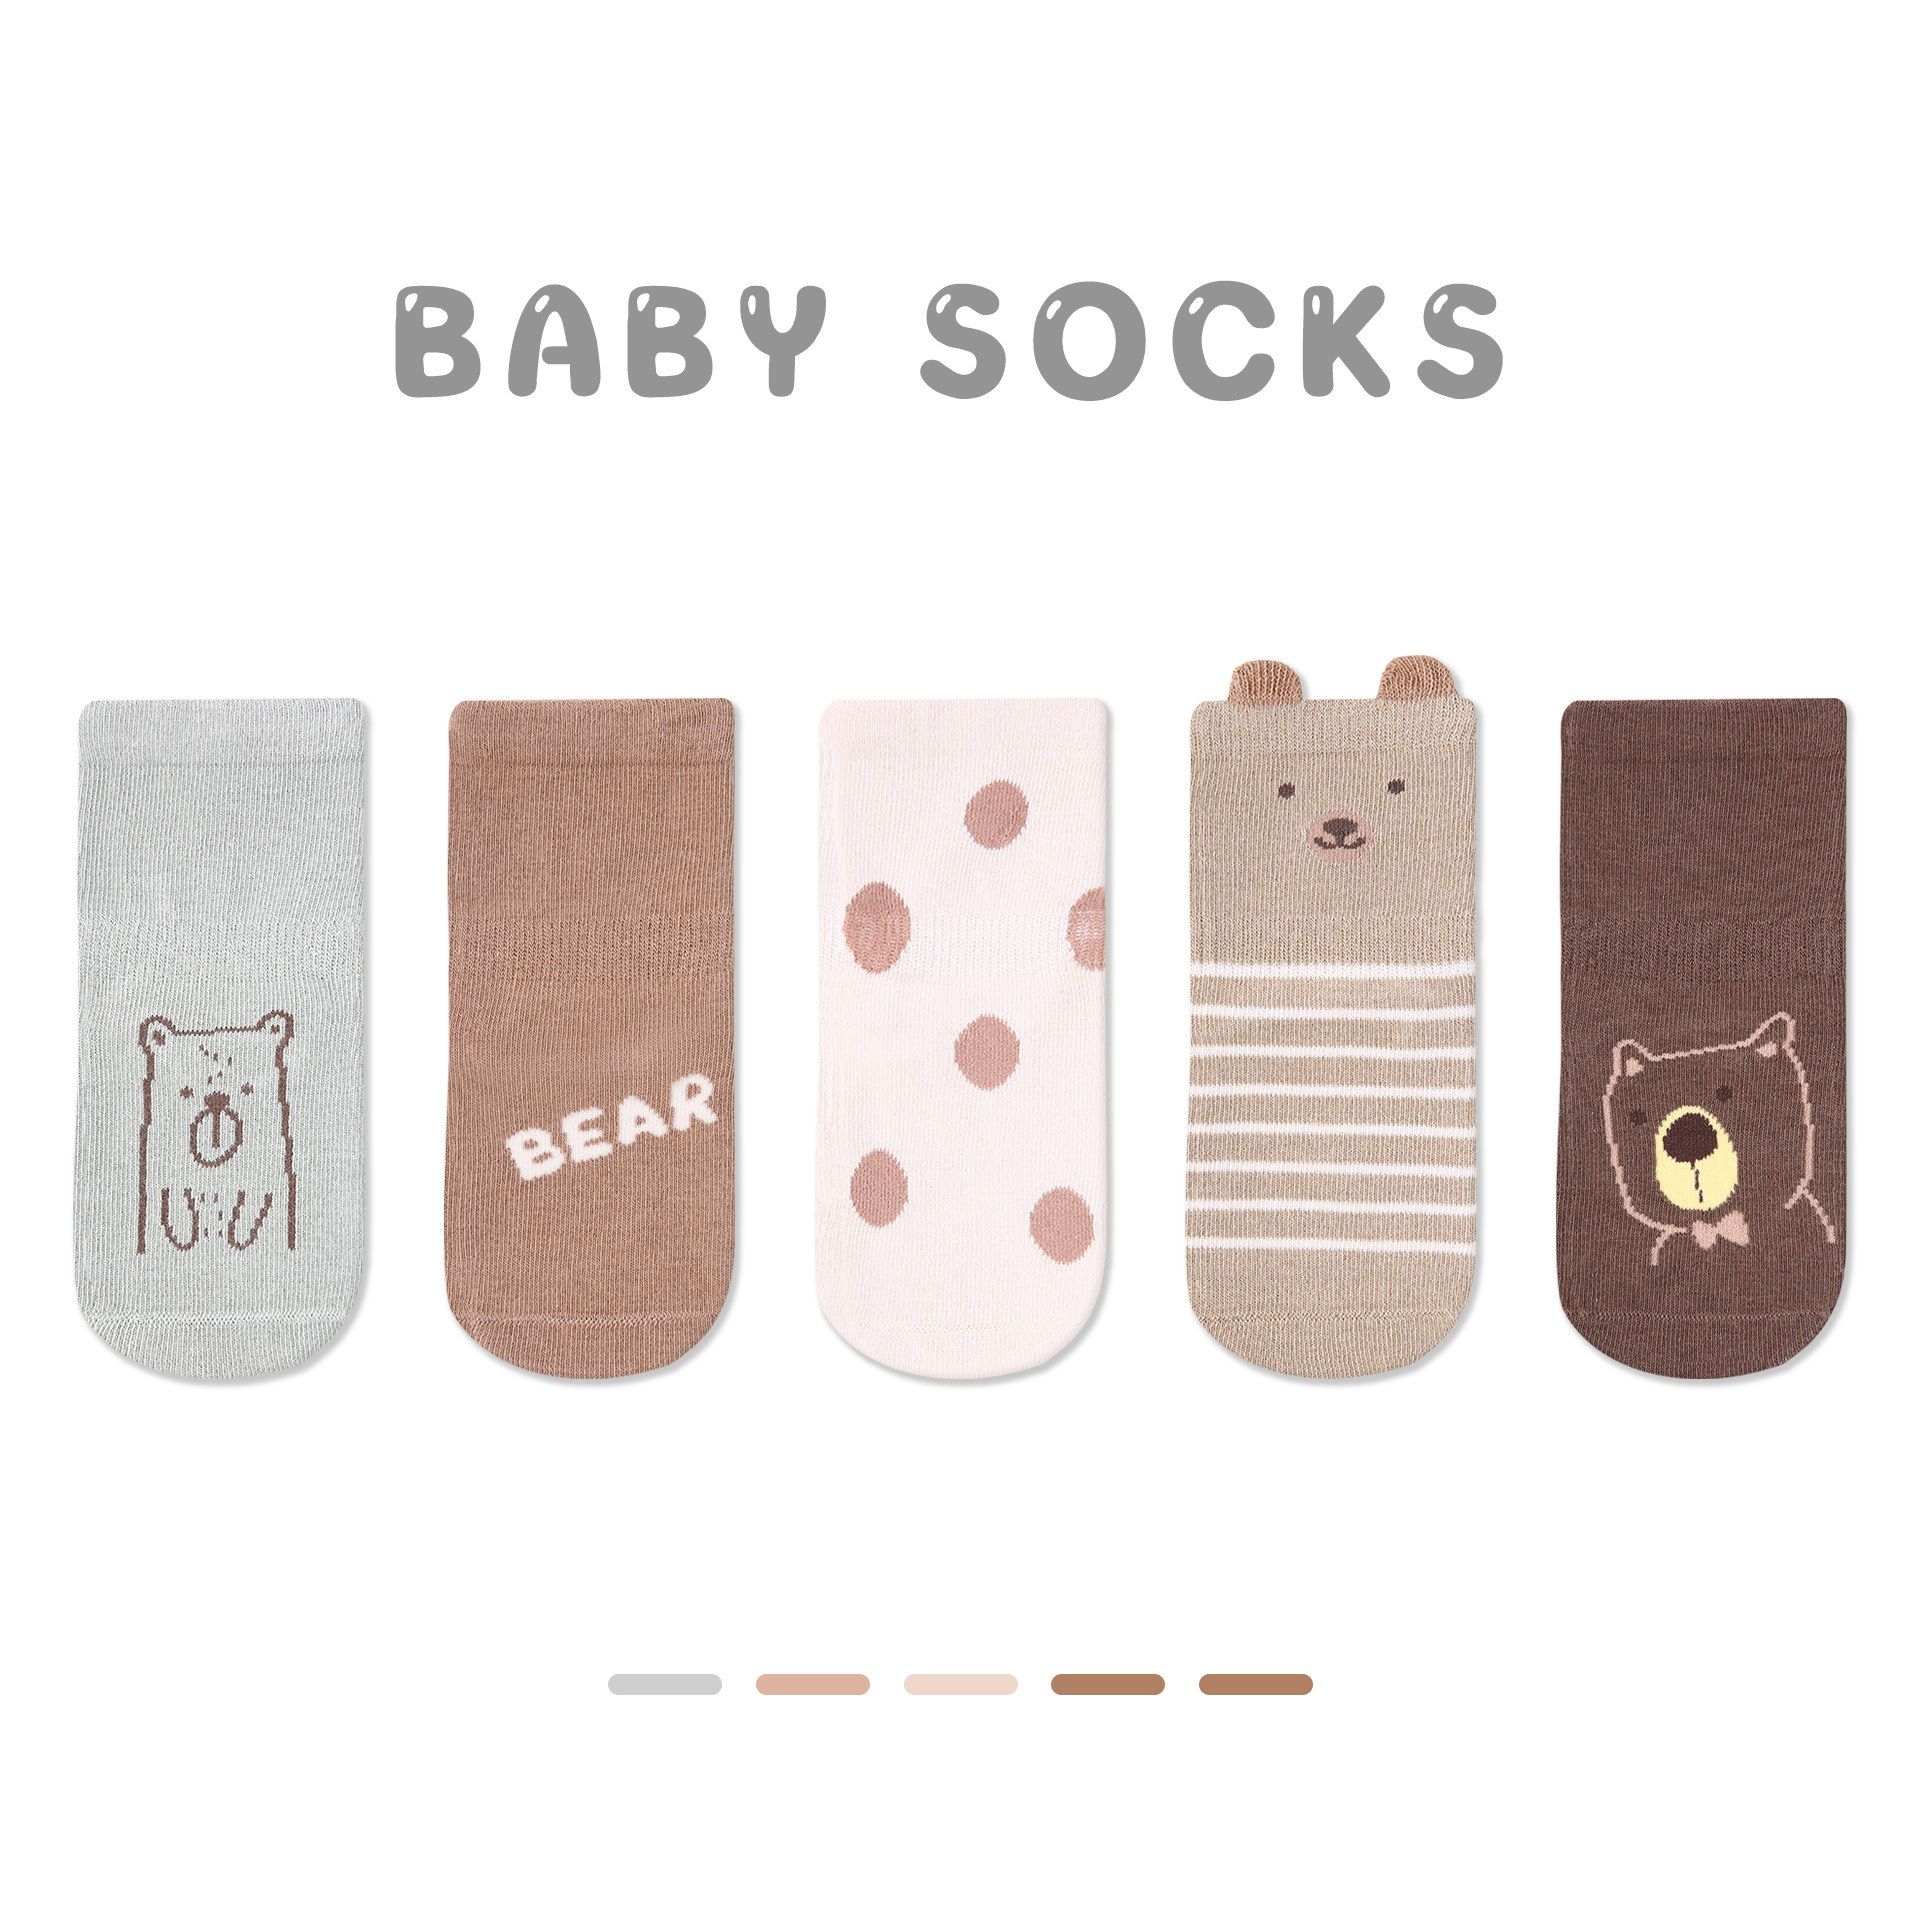 Baby socks wholesale 23 Autumn new three-dimensional bear baby socks Class a boneless combed cotton newborn socks